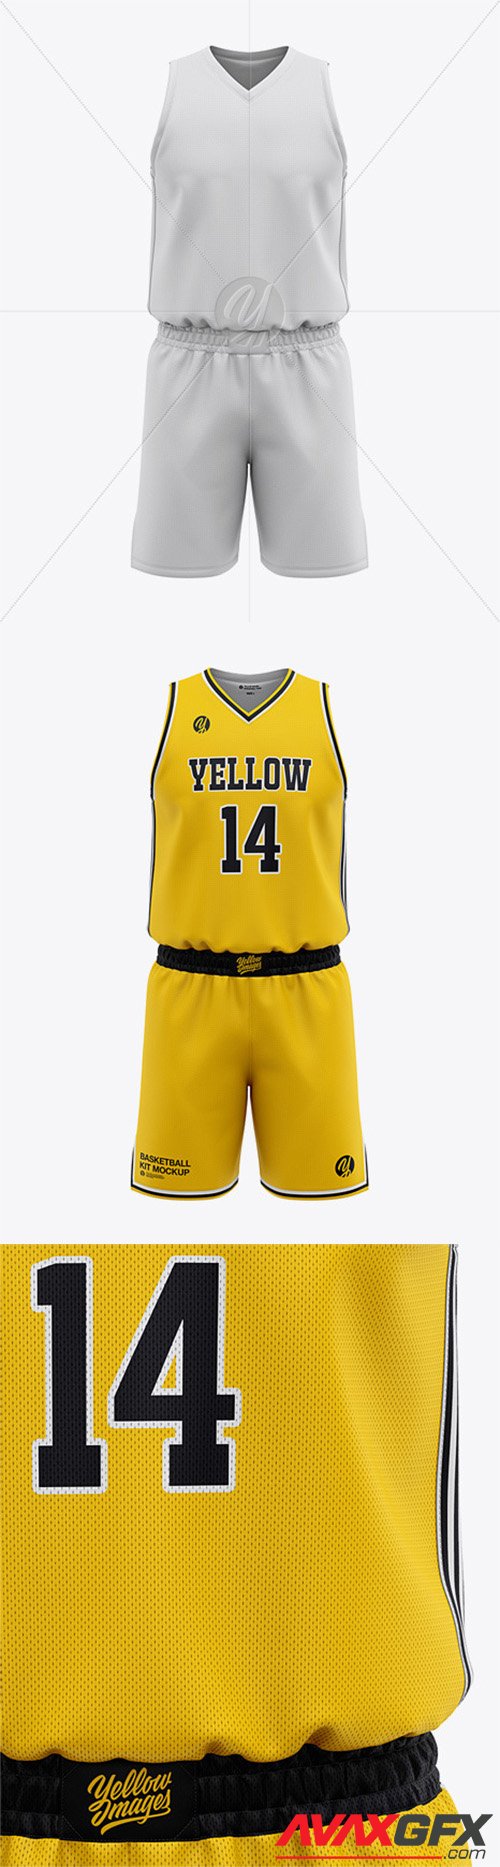 Men’s Basketball Kit Mockup - Front View Of Basketball Jersey And Shorts 47248